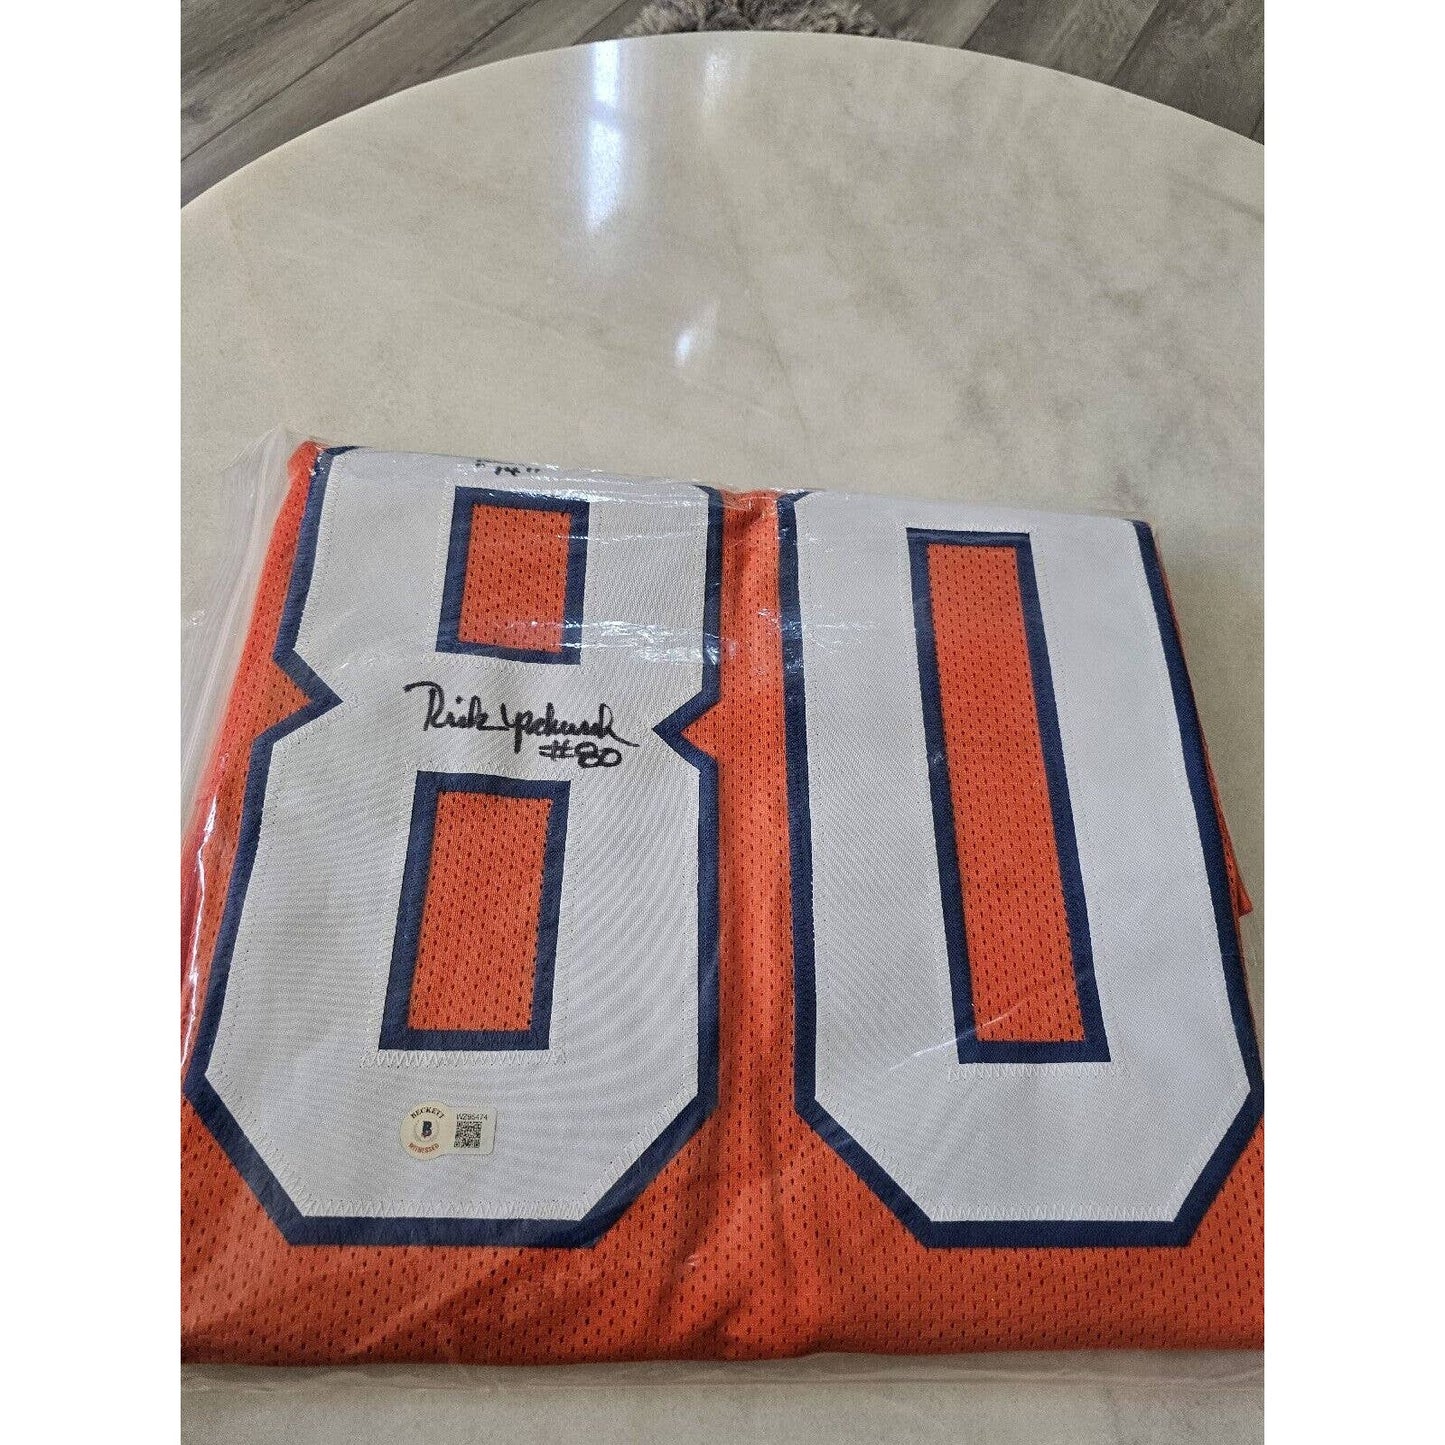 Rick Upchurch Autographed/Signed Jersey Beckett Sticker Denver Broncos